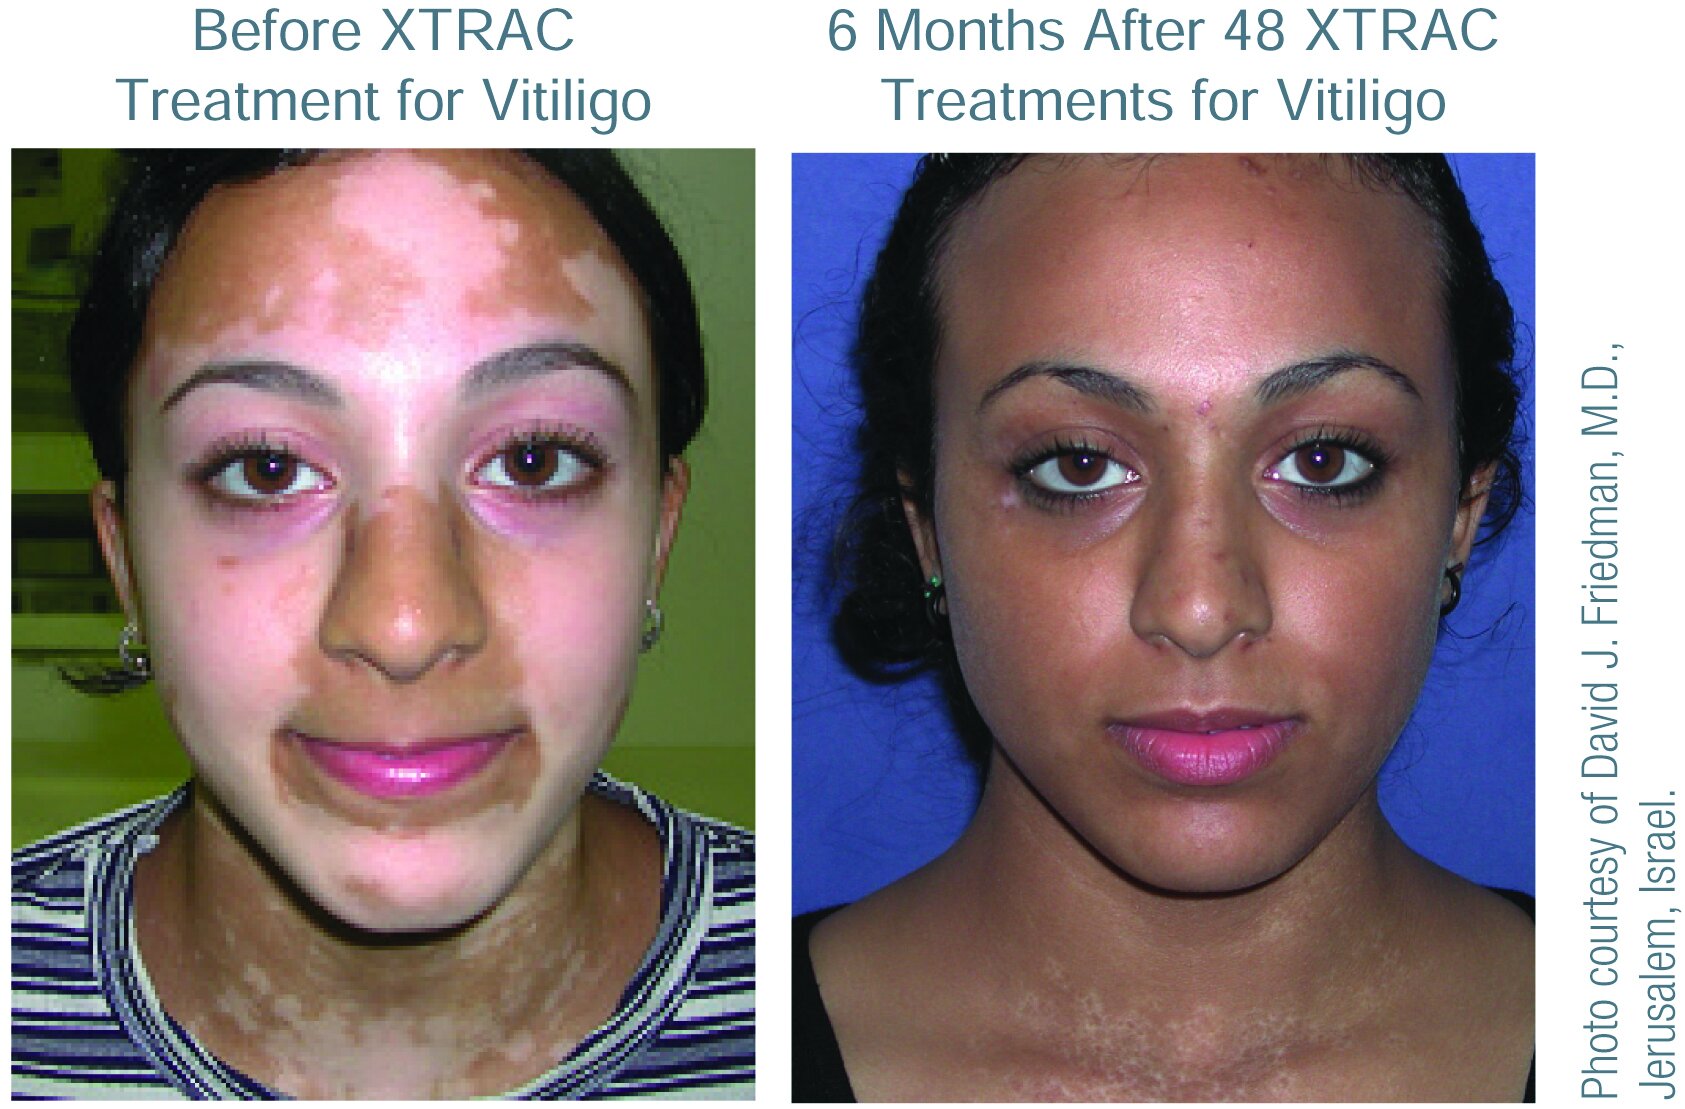 Treatment vitiligo Updates and